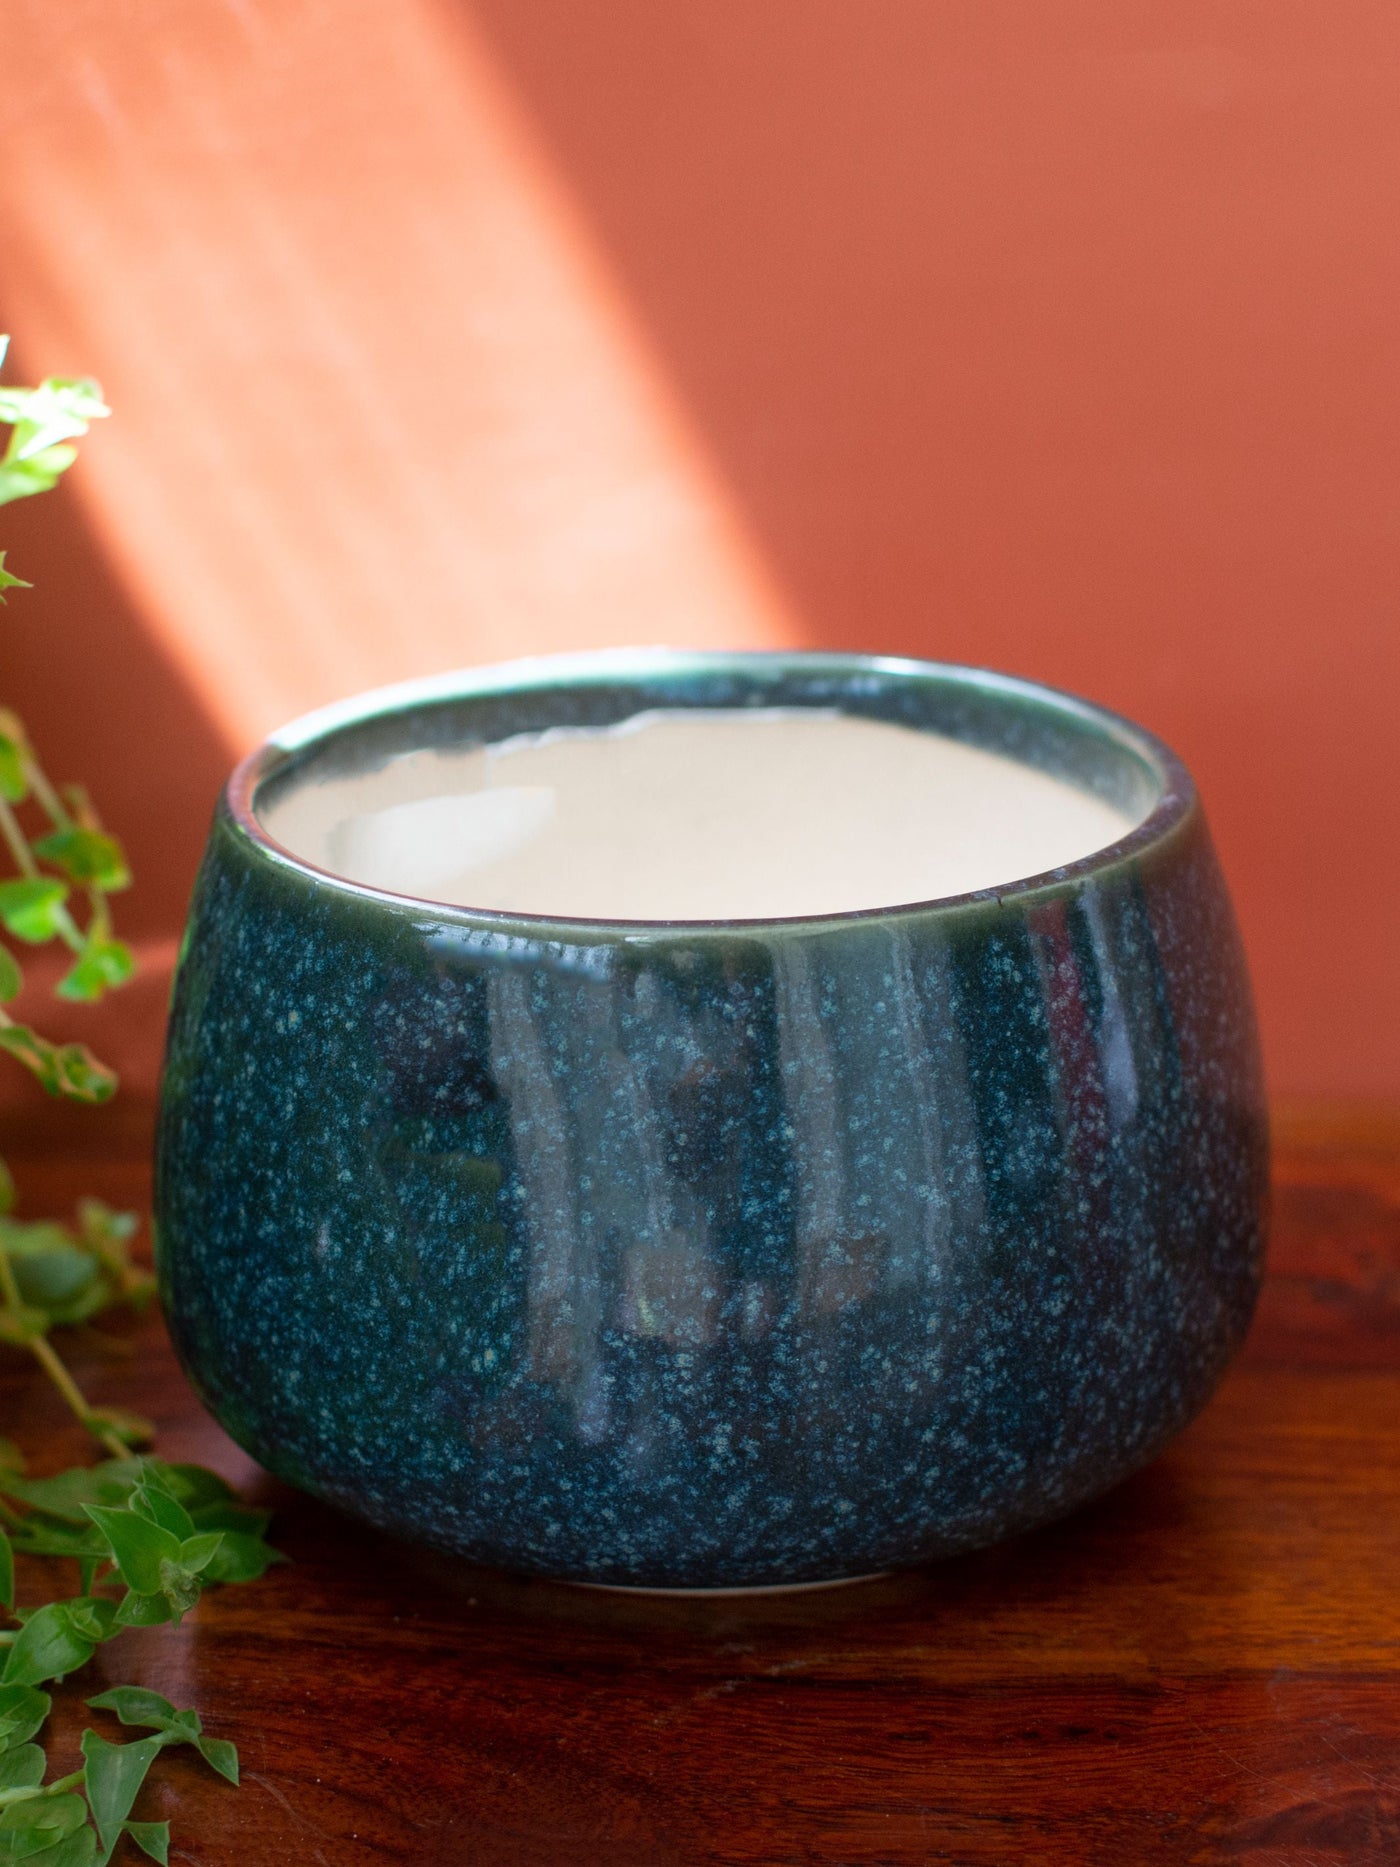 Round Ceramic Bonsai Planter Blue